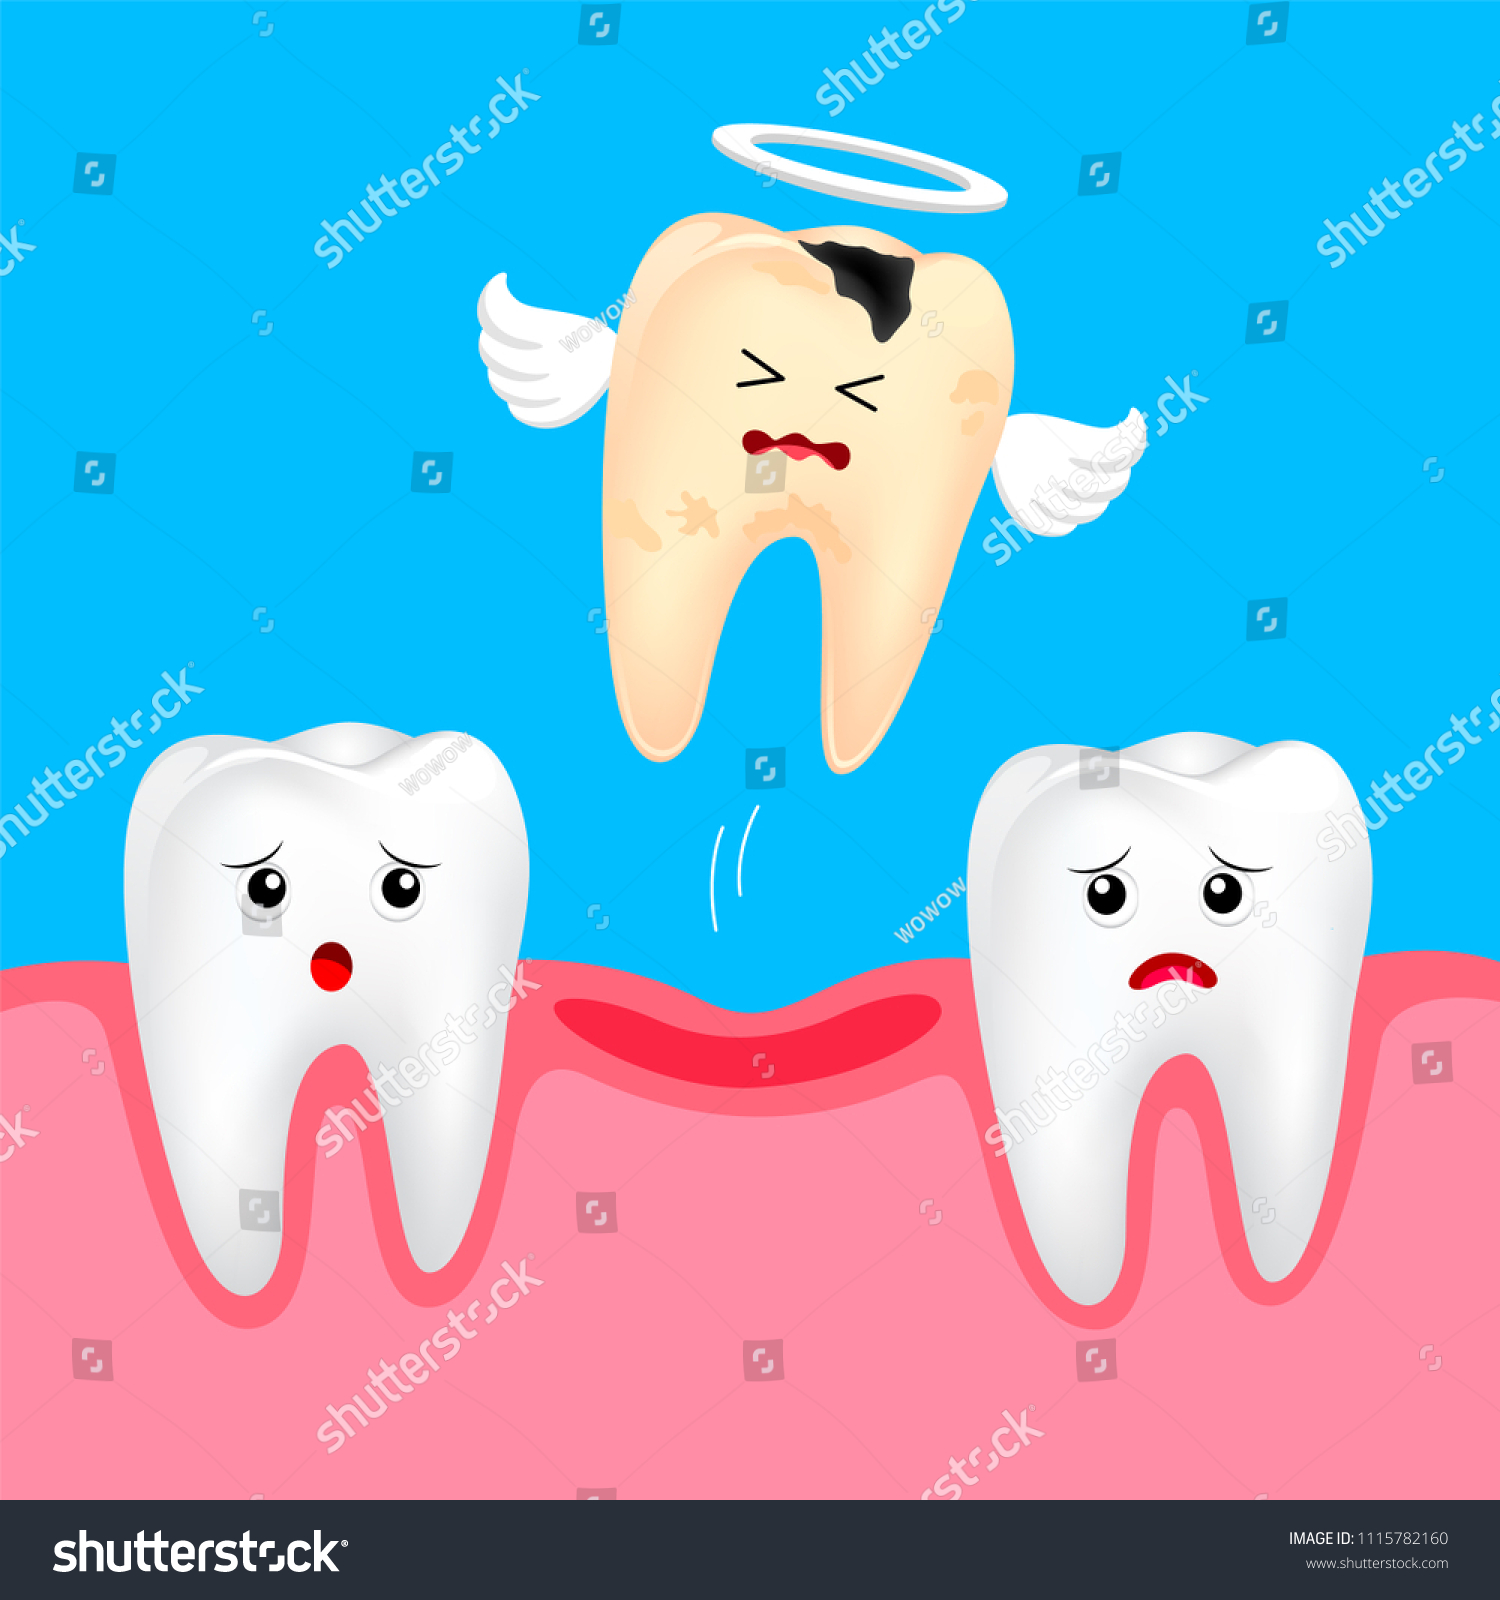 зубы веселые картинки